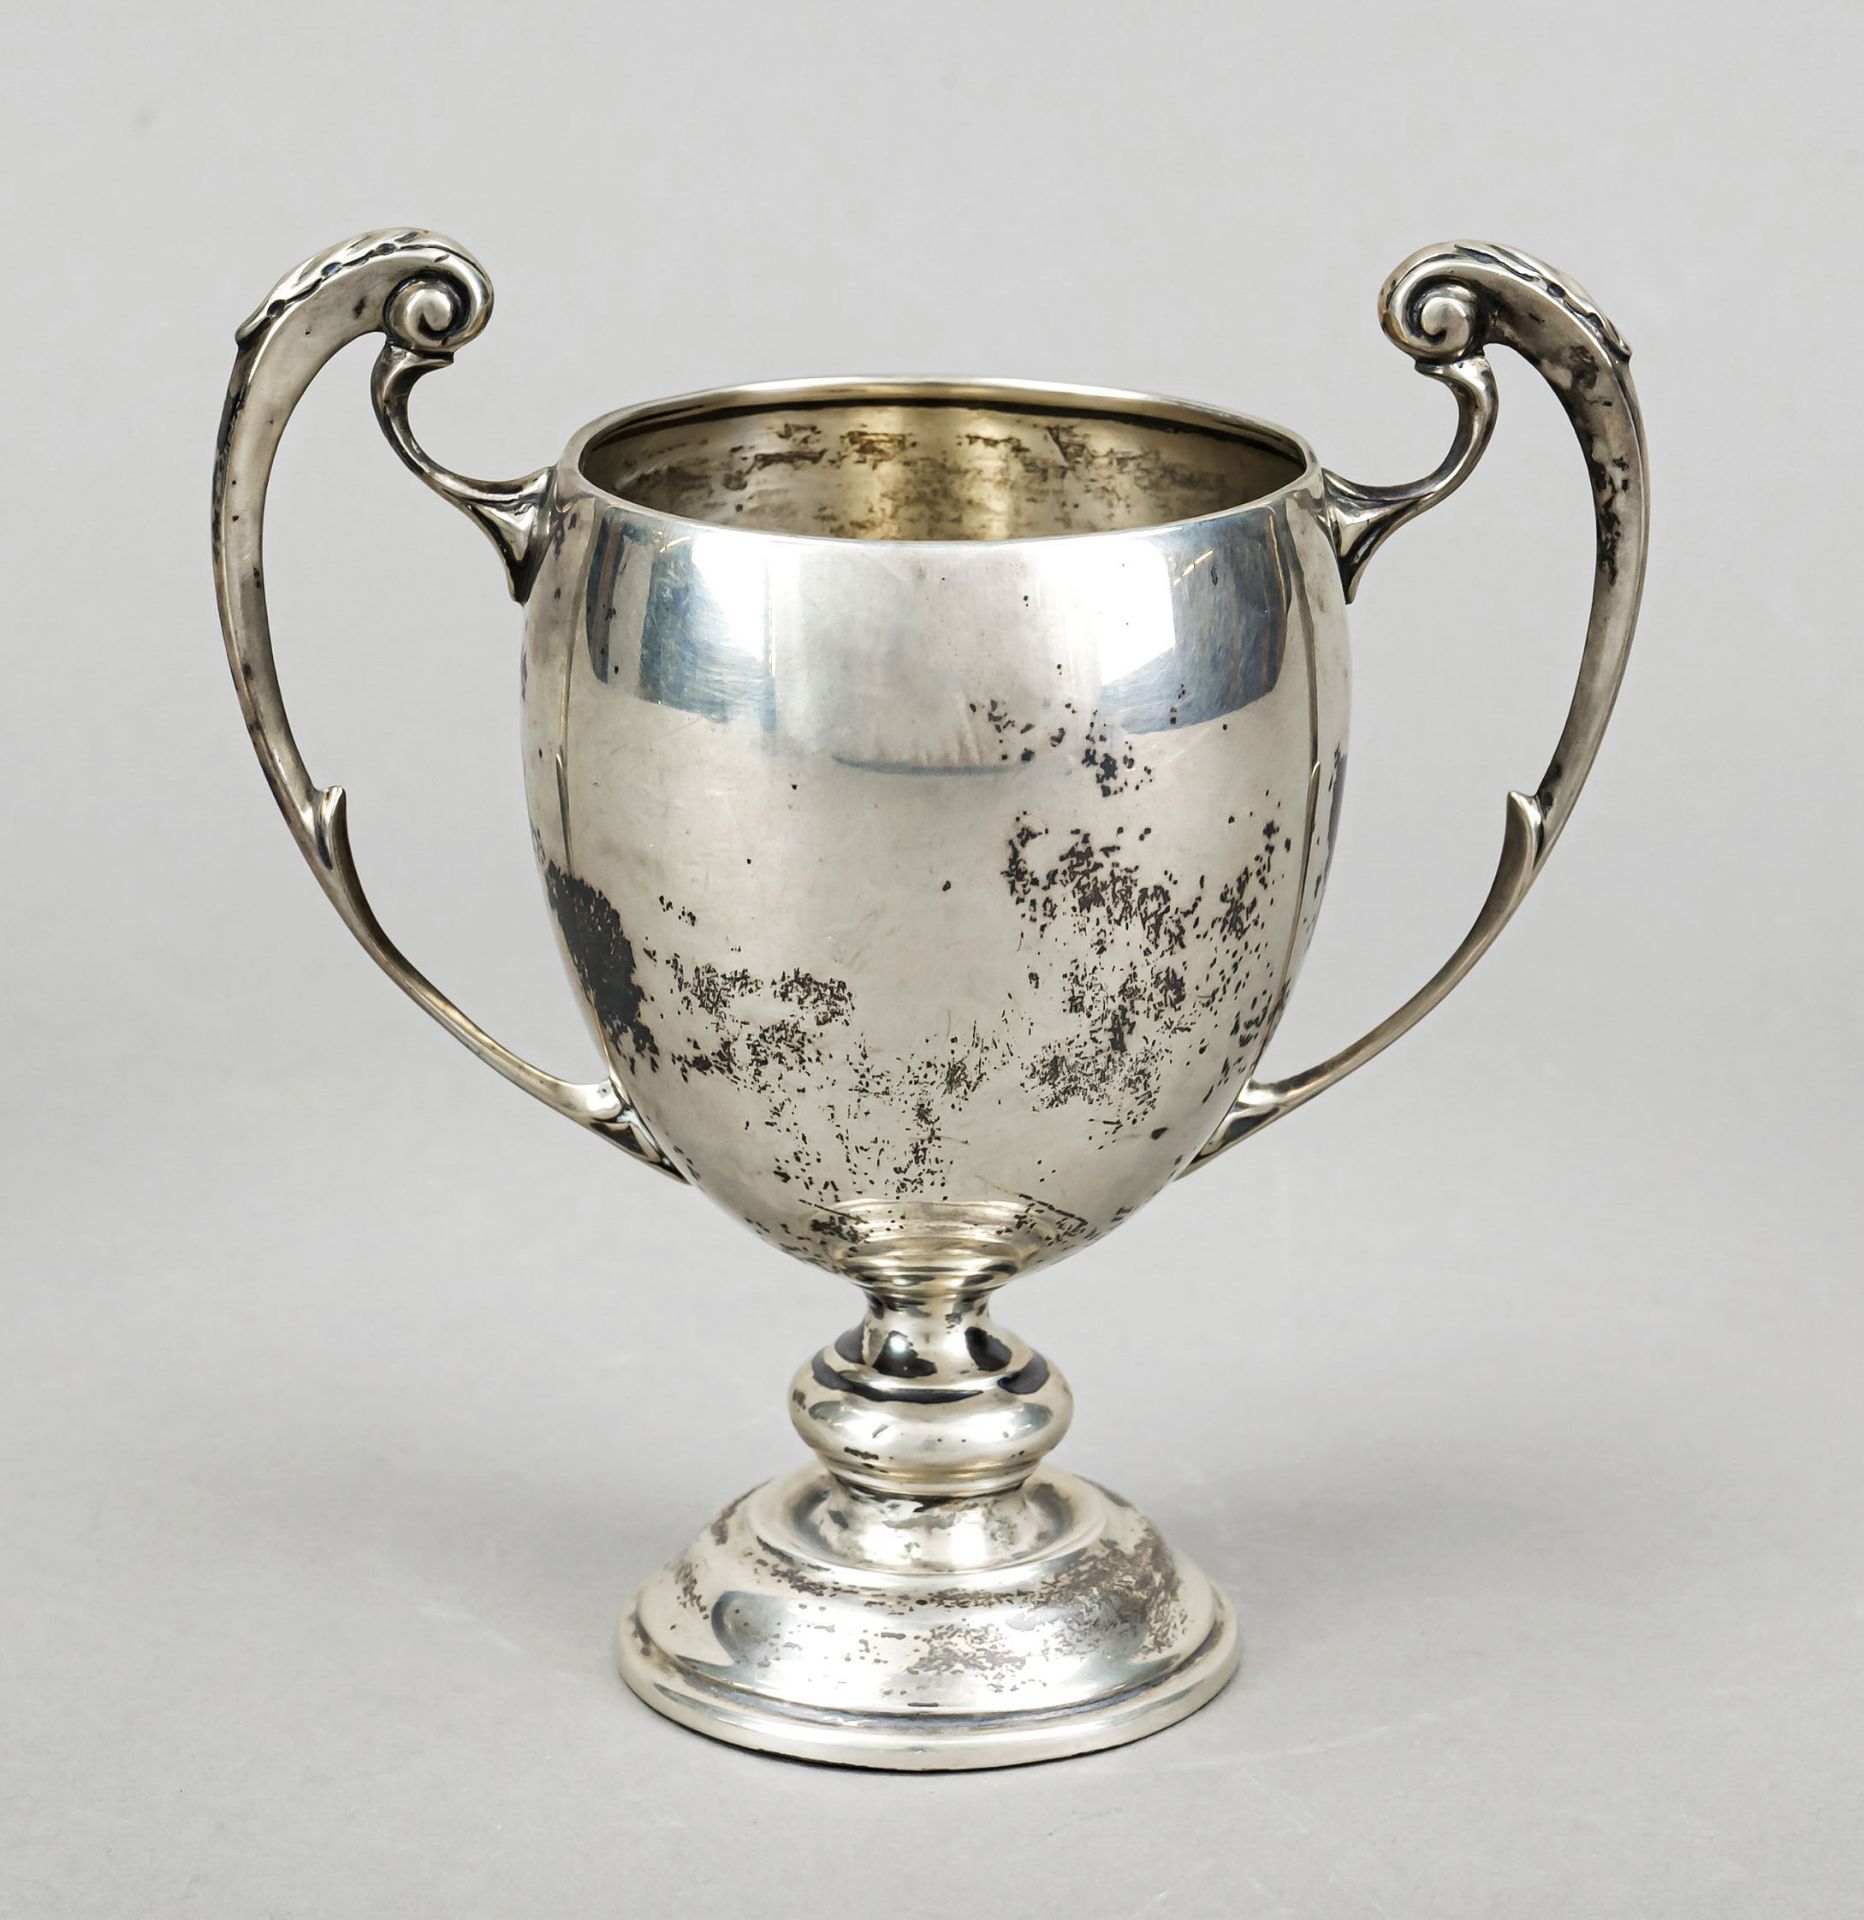 Mug, England, 1933, maker's mark James Dixon & Sons, Sheffield, sterling silver 925/000, round domed